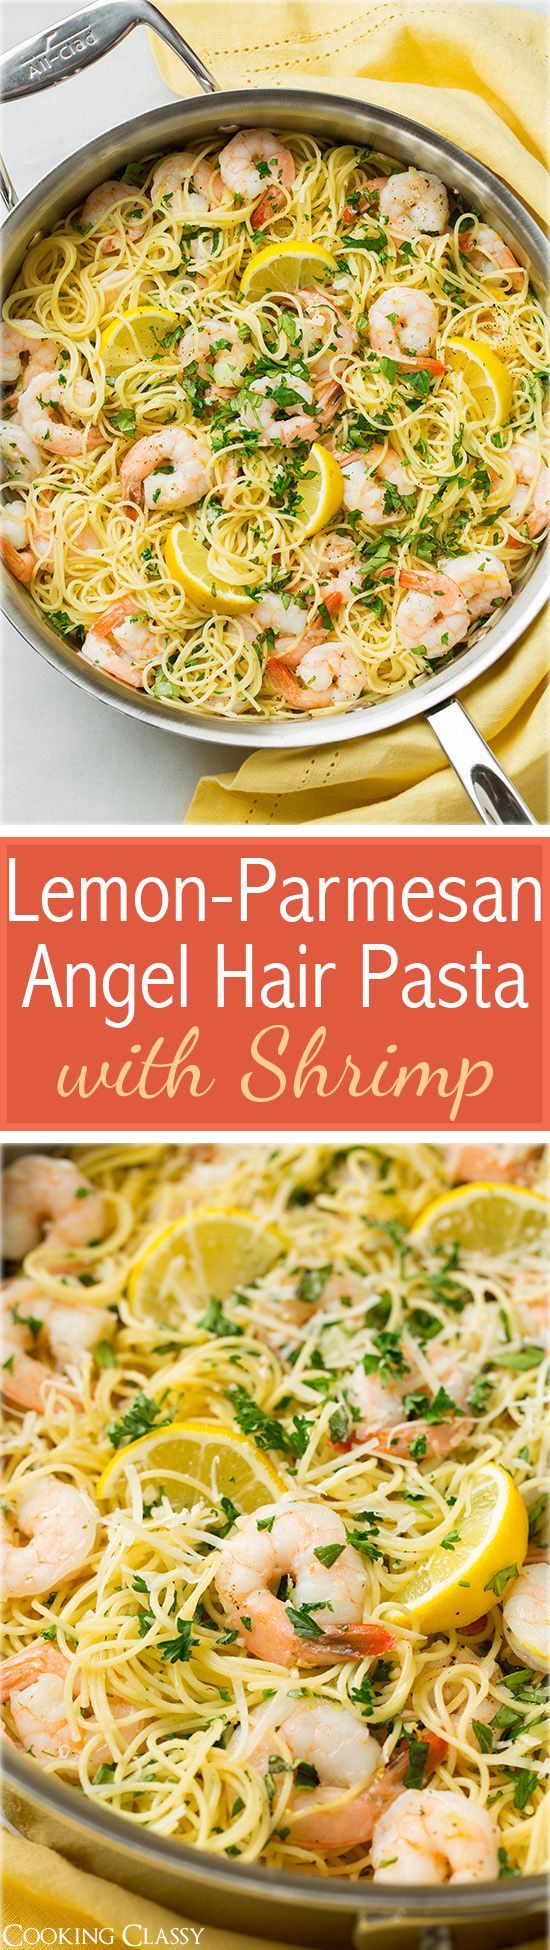 Lemon-Parmesan Angel Hair Pasta with Shrimp – Love the vibrant lemon, parmesan and fresh herbs paired